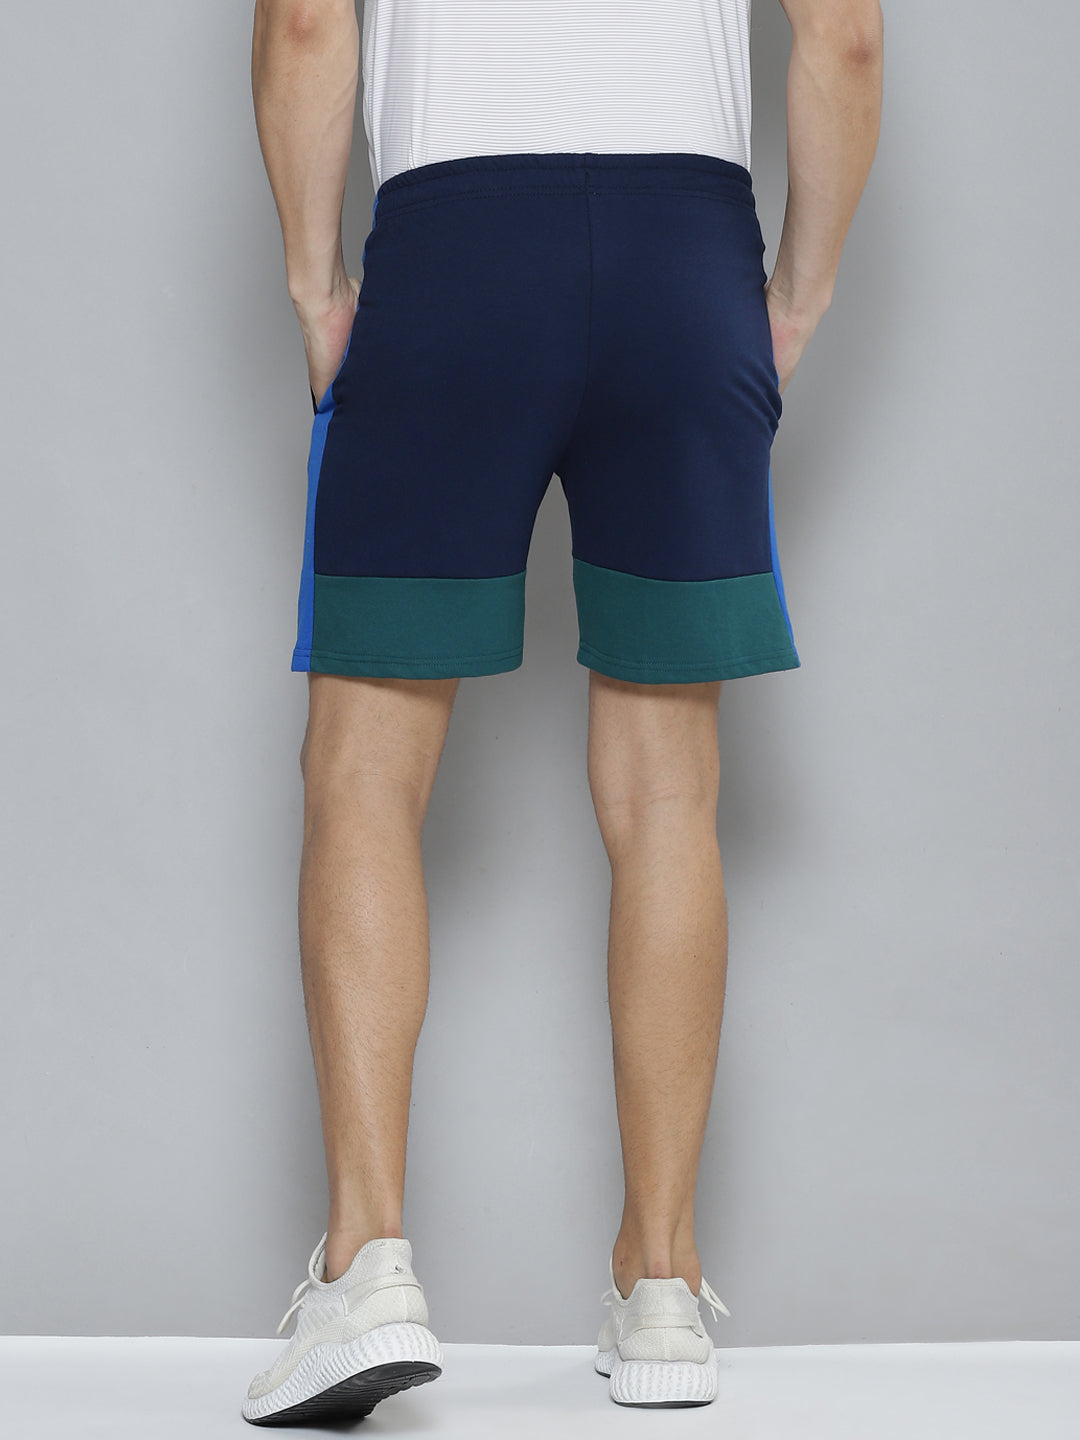 Alcis Men Navy Blue Green Colourblocked Slim Fit Training or Gym Sports Shorts